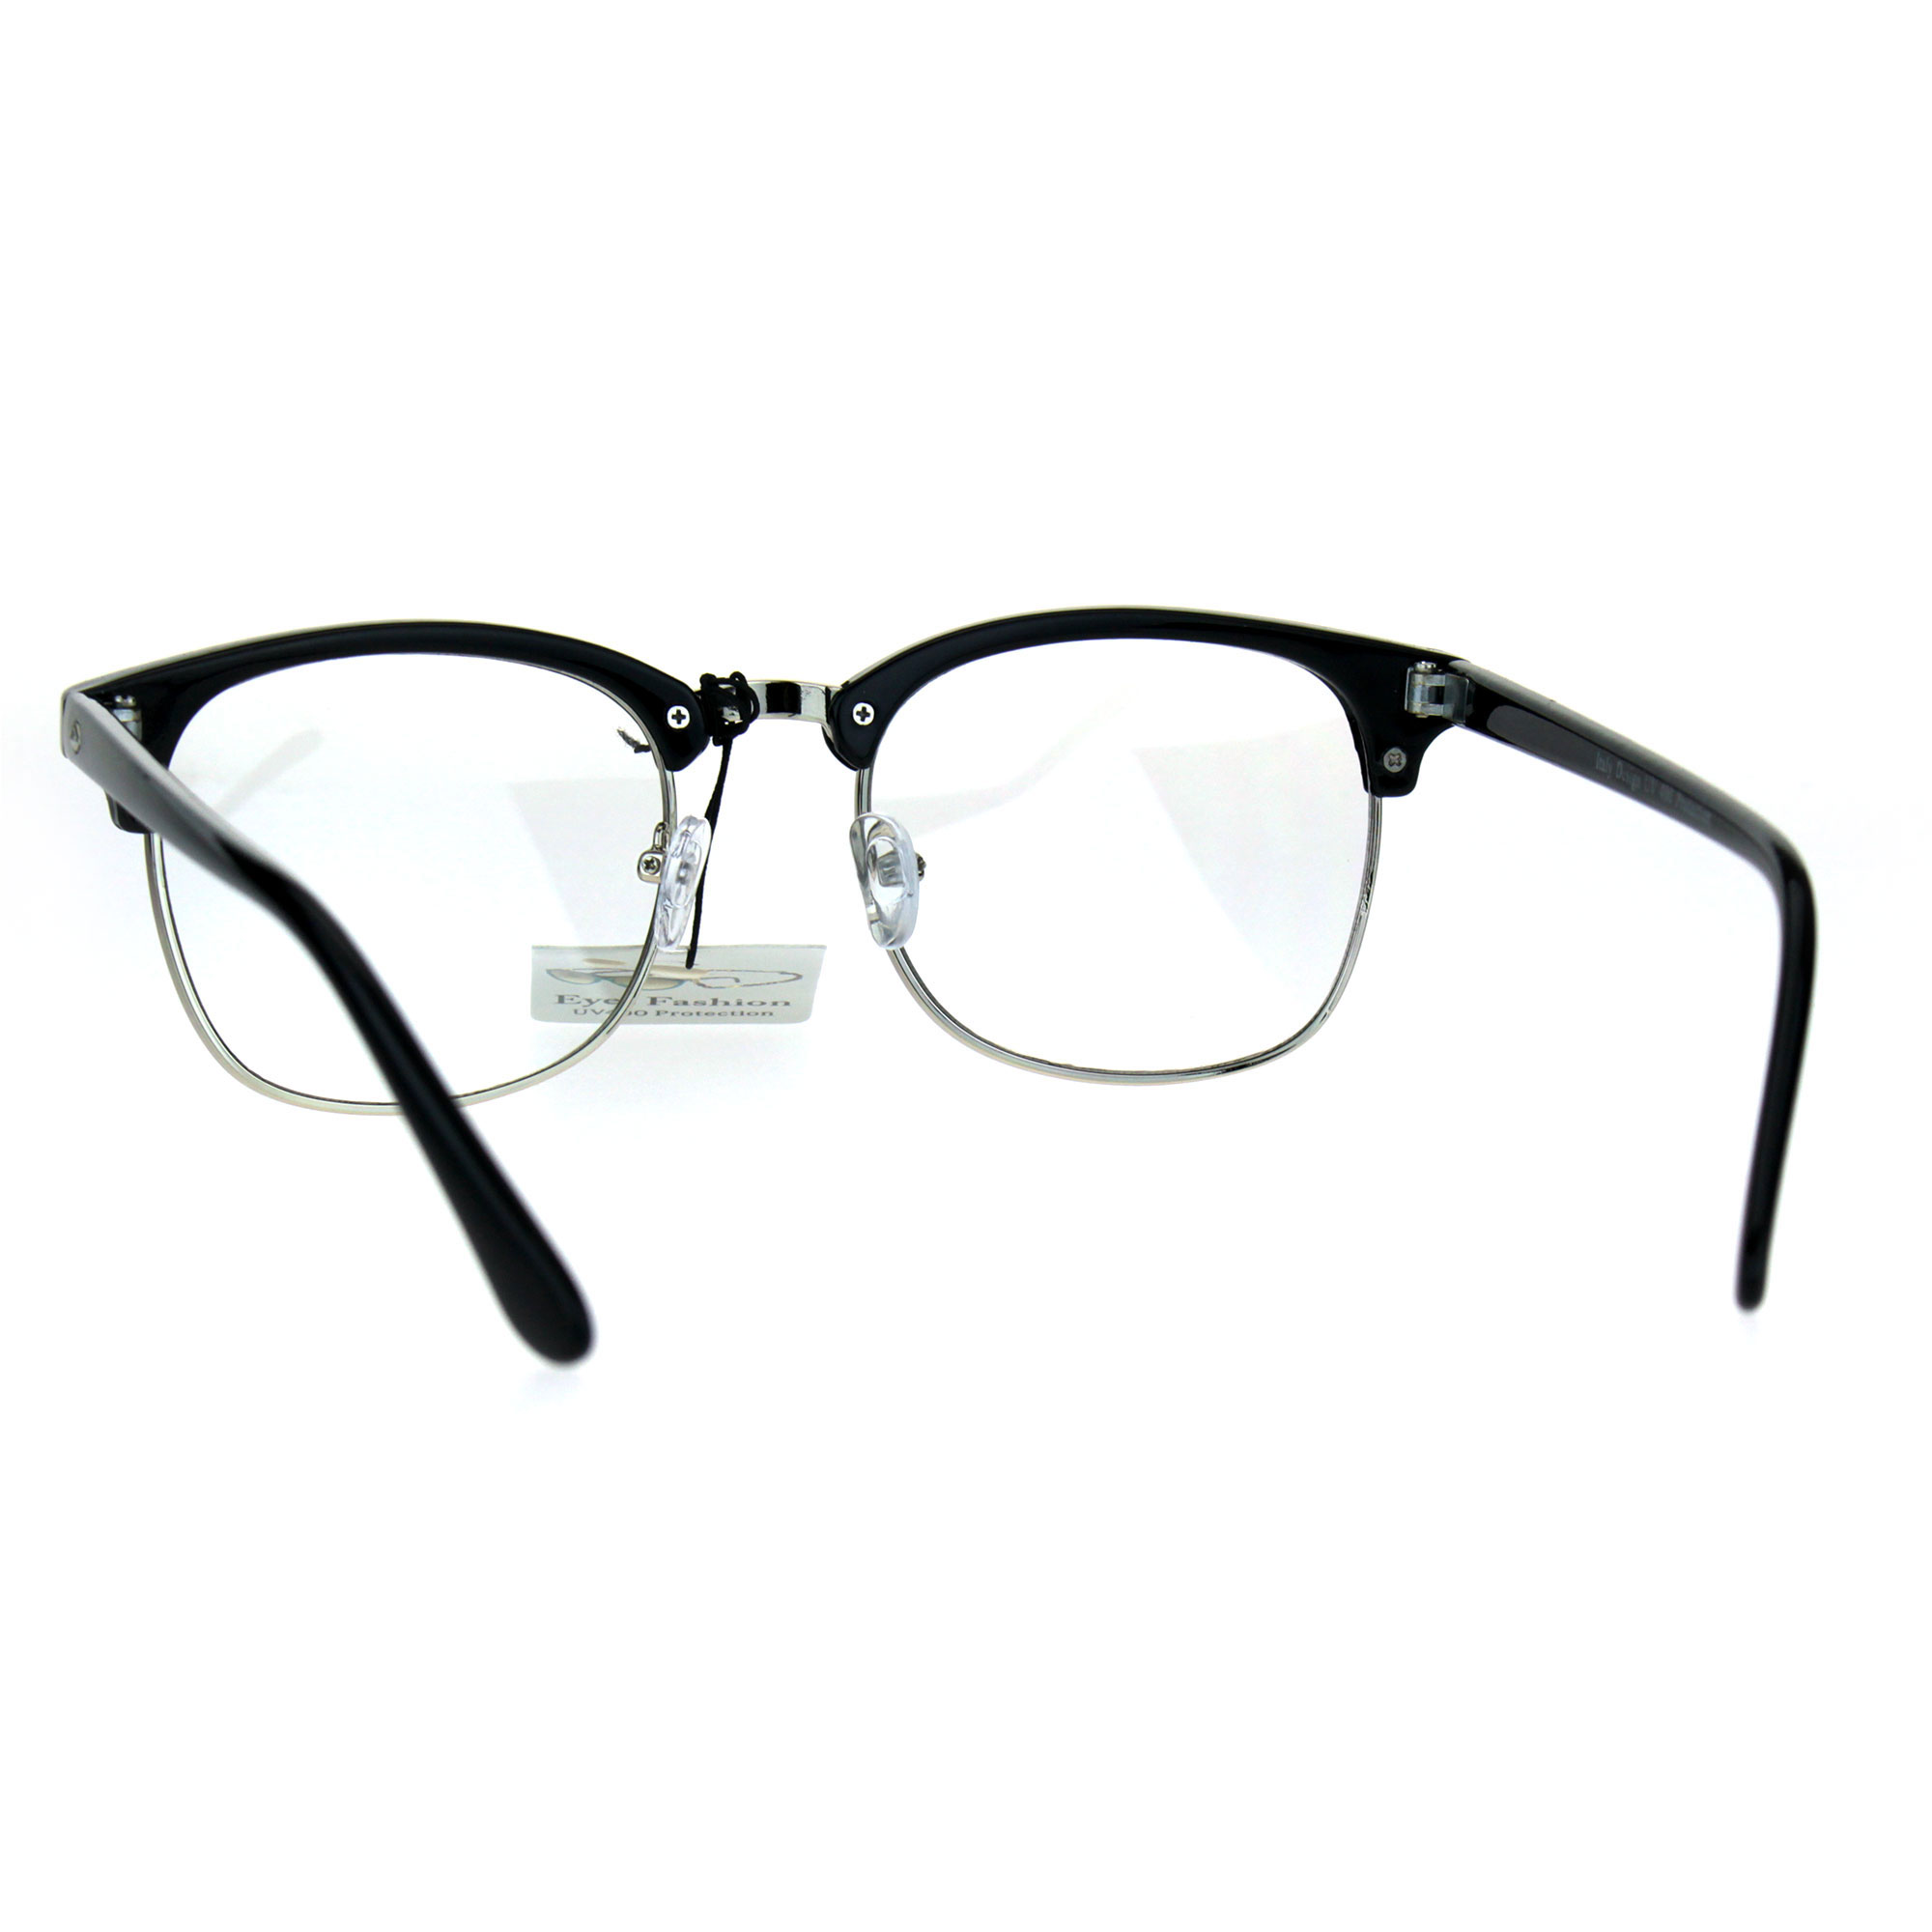 Mens Classic Horned Half Rim Hipster Nerdy Retro Eye Glasses | eBay